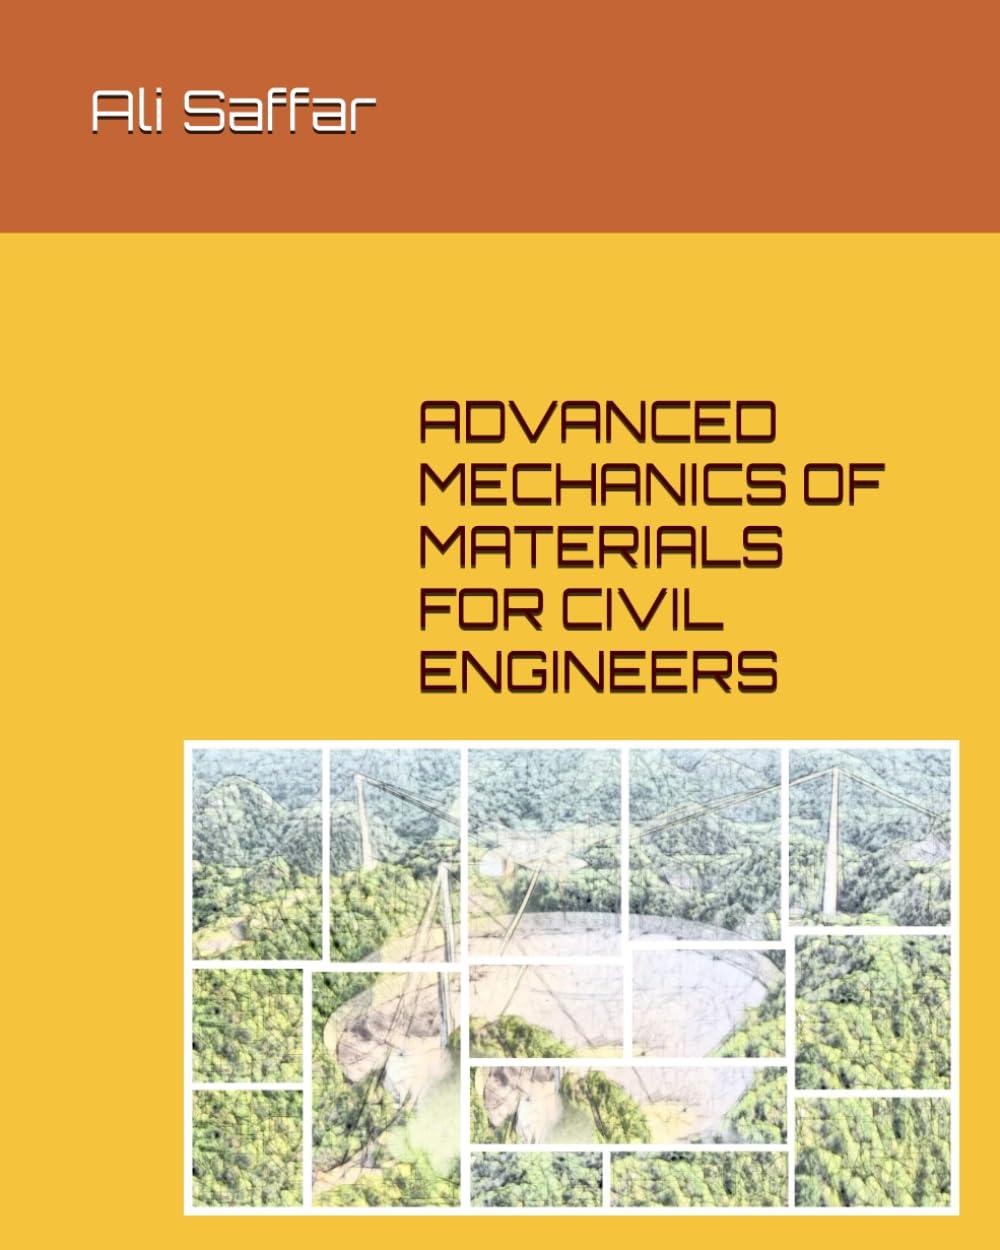 advanced mechanics of materials for civil engineer 1st edition dr. ali saffar b0chlc1ydf, 979-8861019194